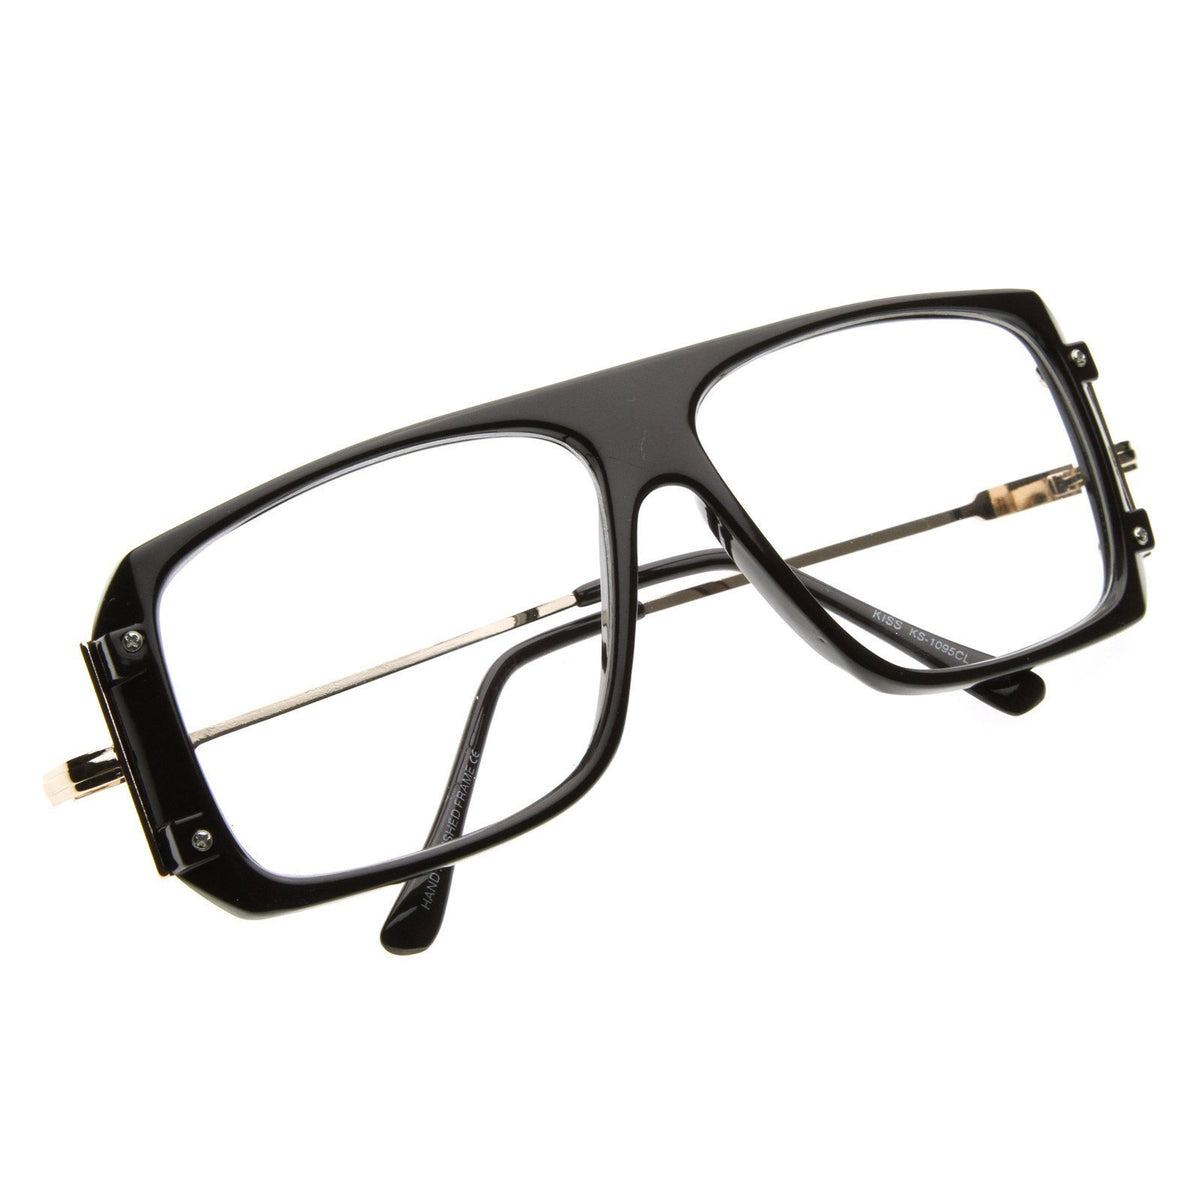 Hipster DJ European Square Clear Lens Glasses